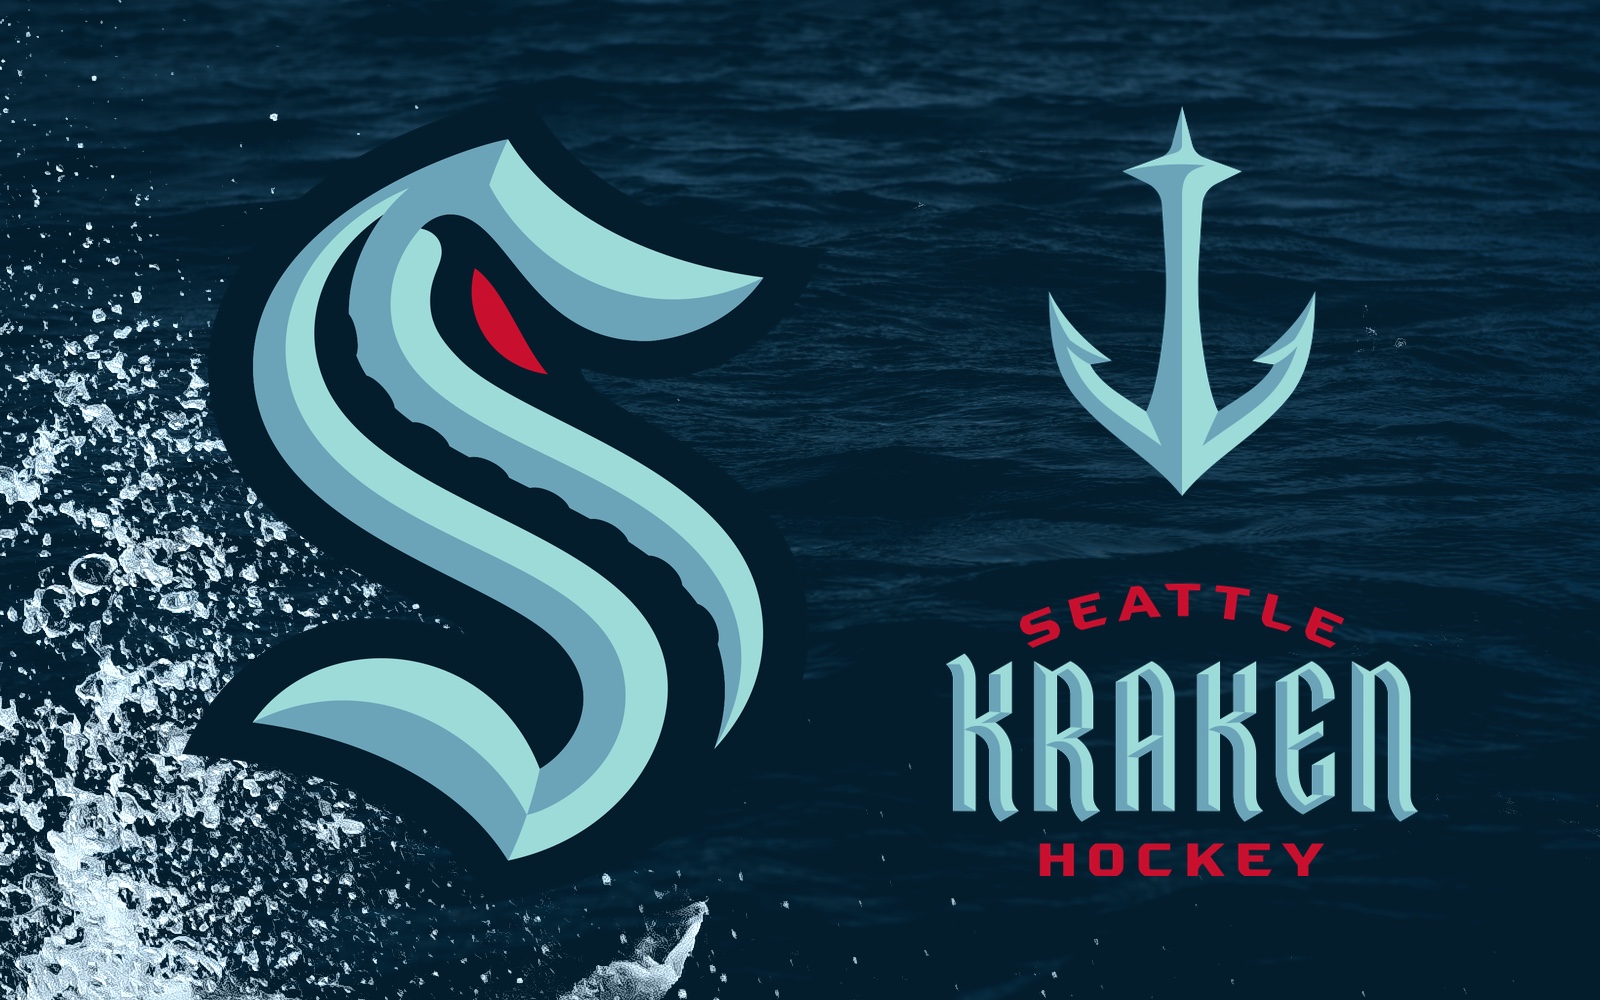 Seattle Metropolitans - Seattle's Hockey Team